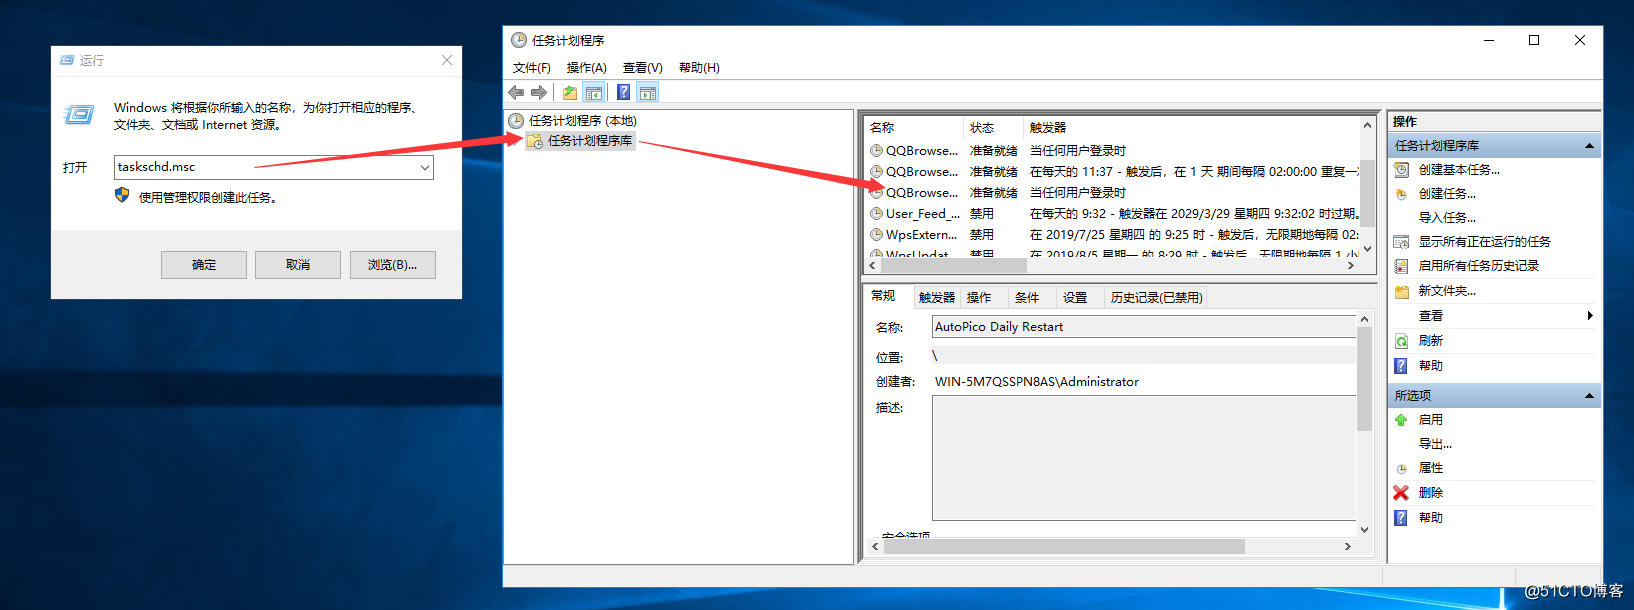 [Windows] shortcut command windows server system management